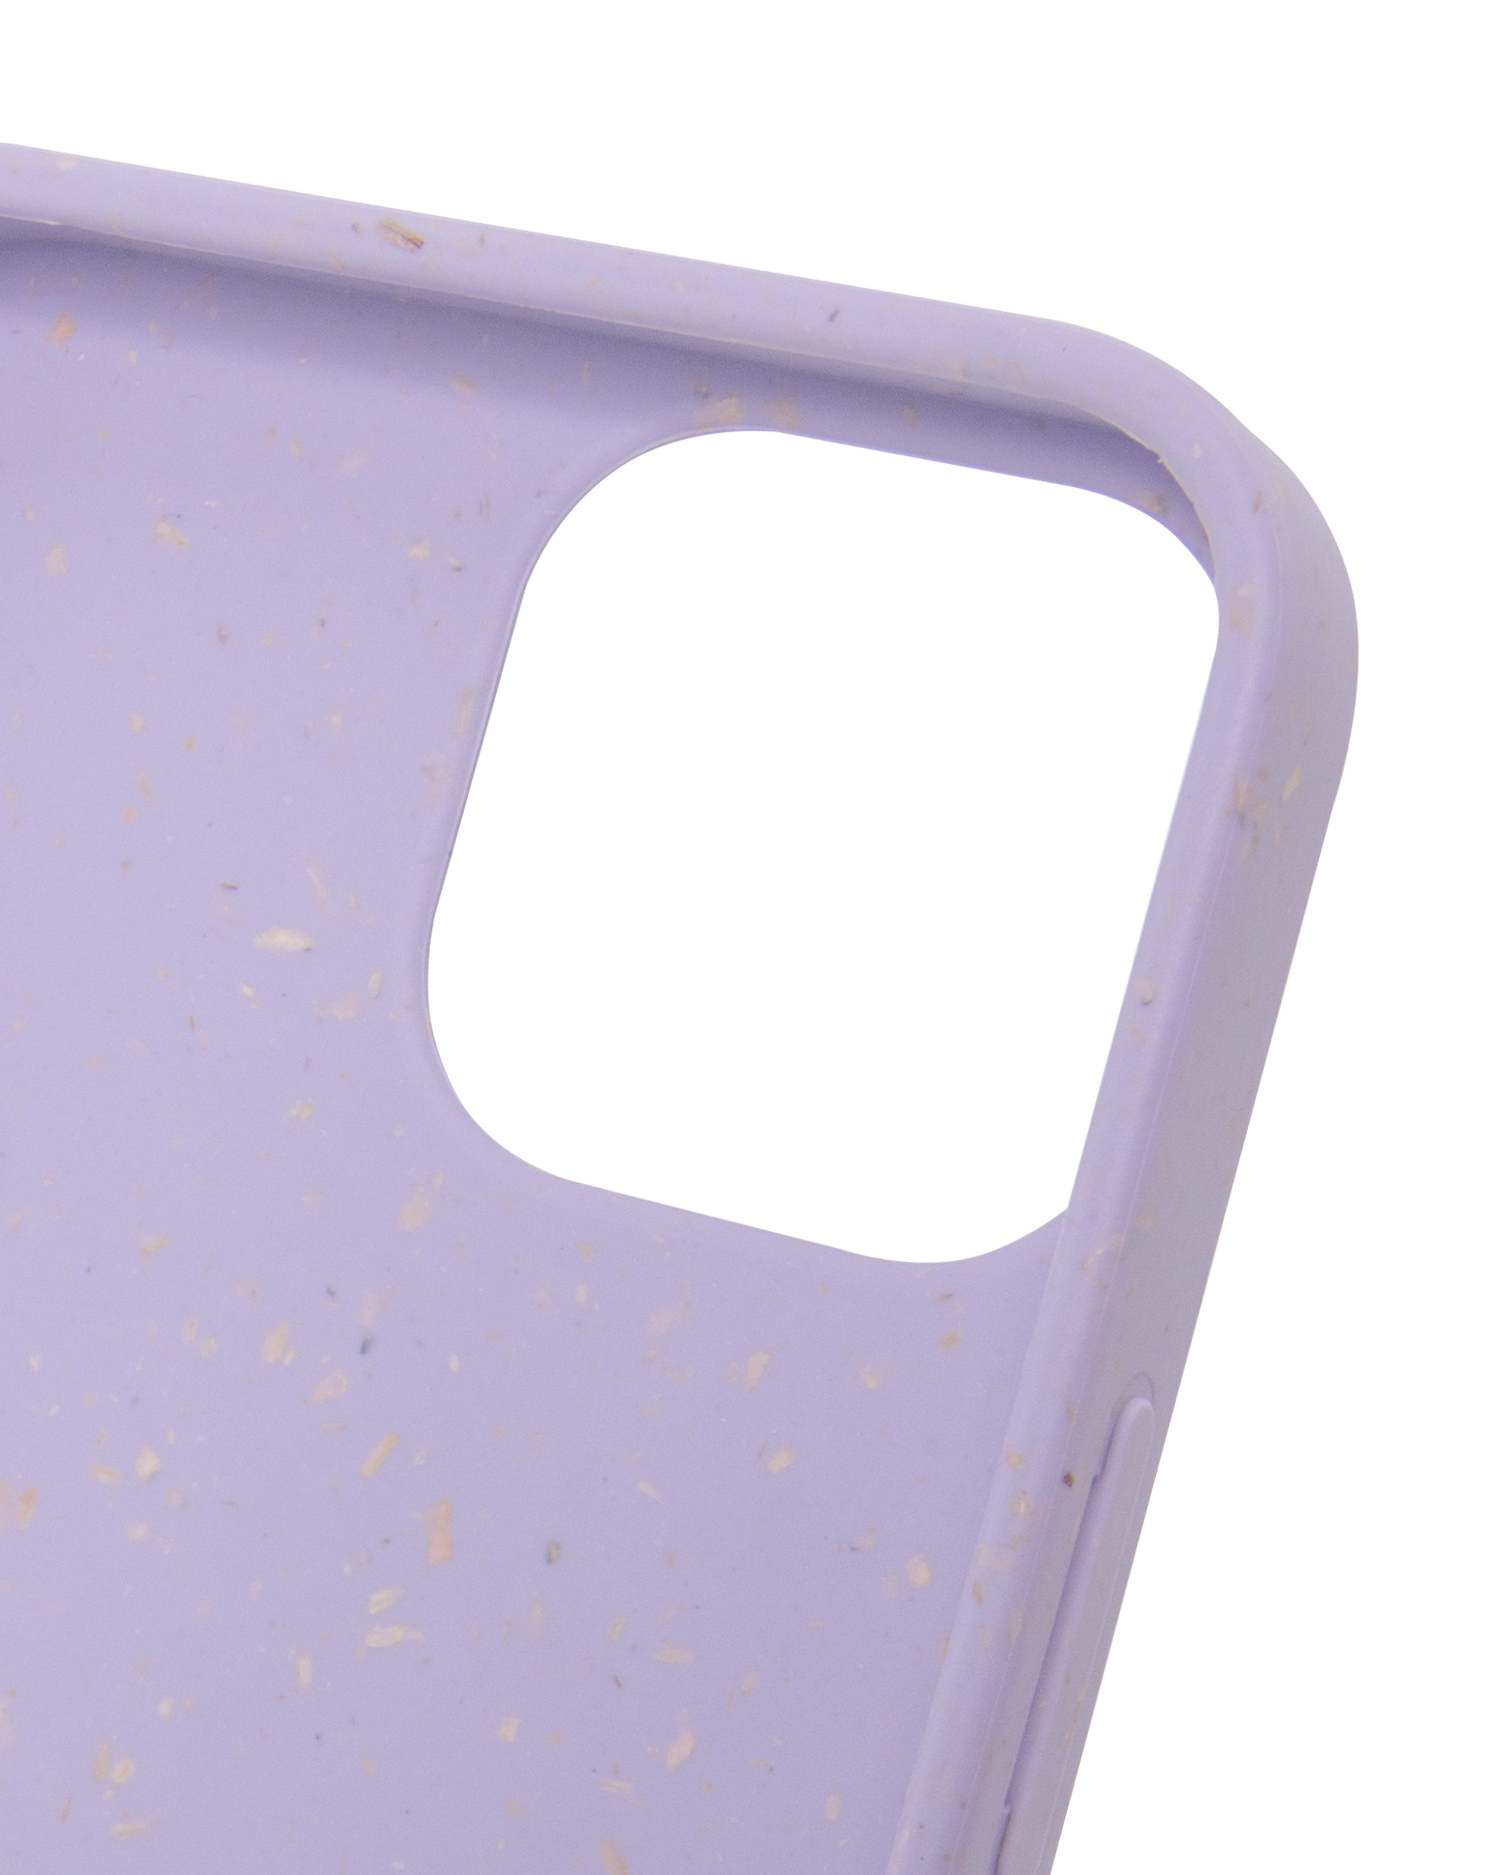 Purple Eco-Friendly Phone Case for Apple iPhone 12 mini: Details inside